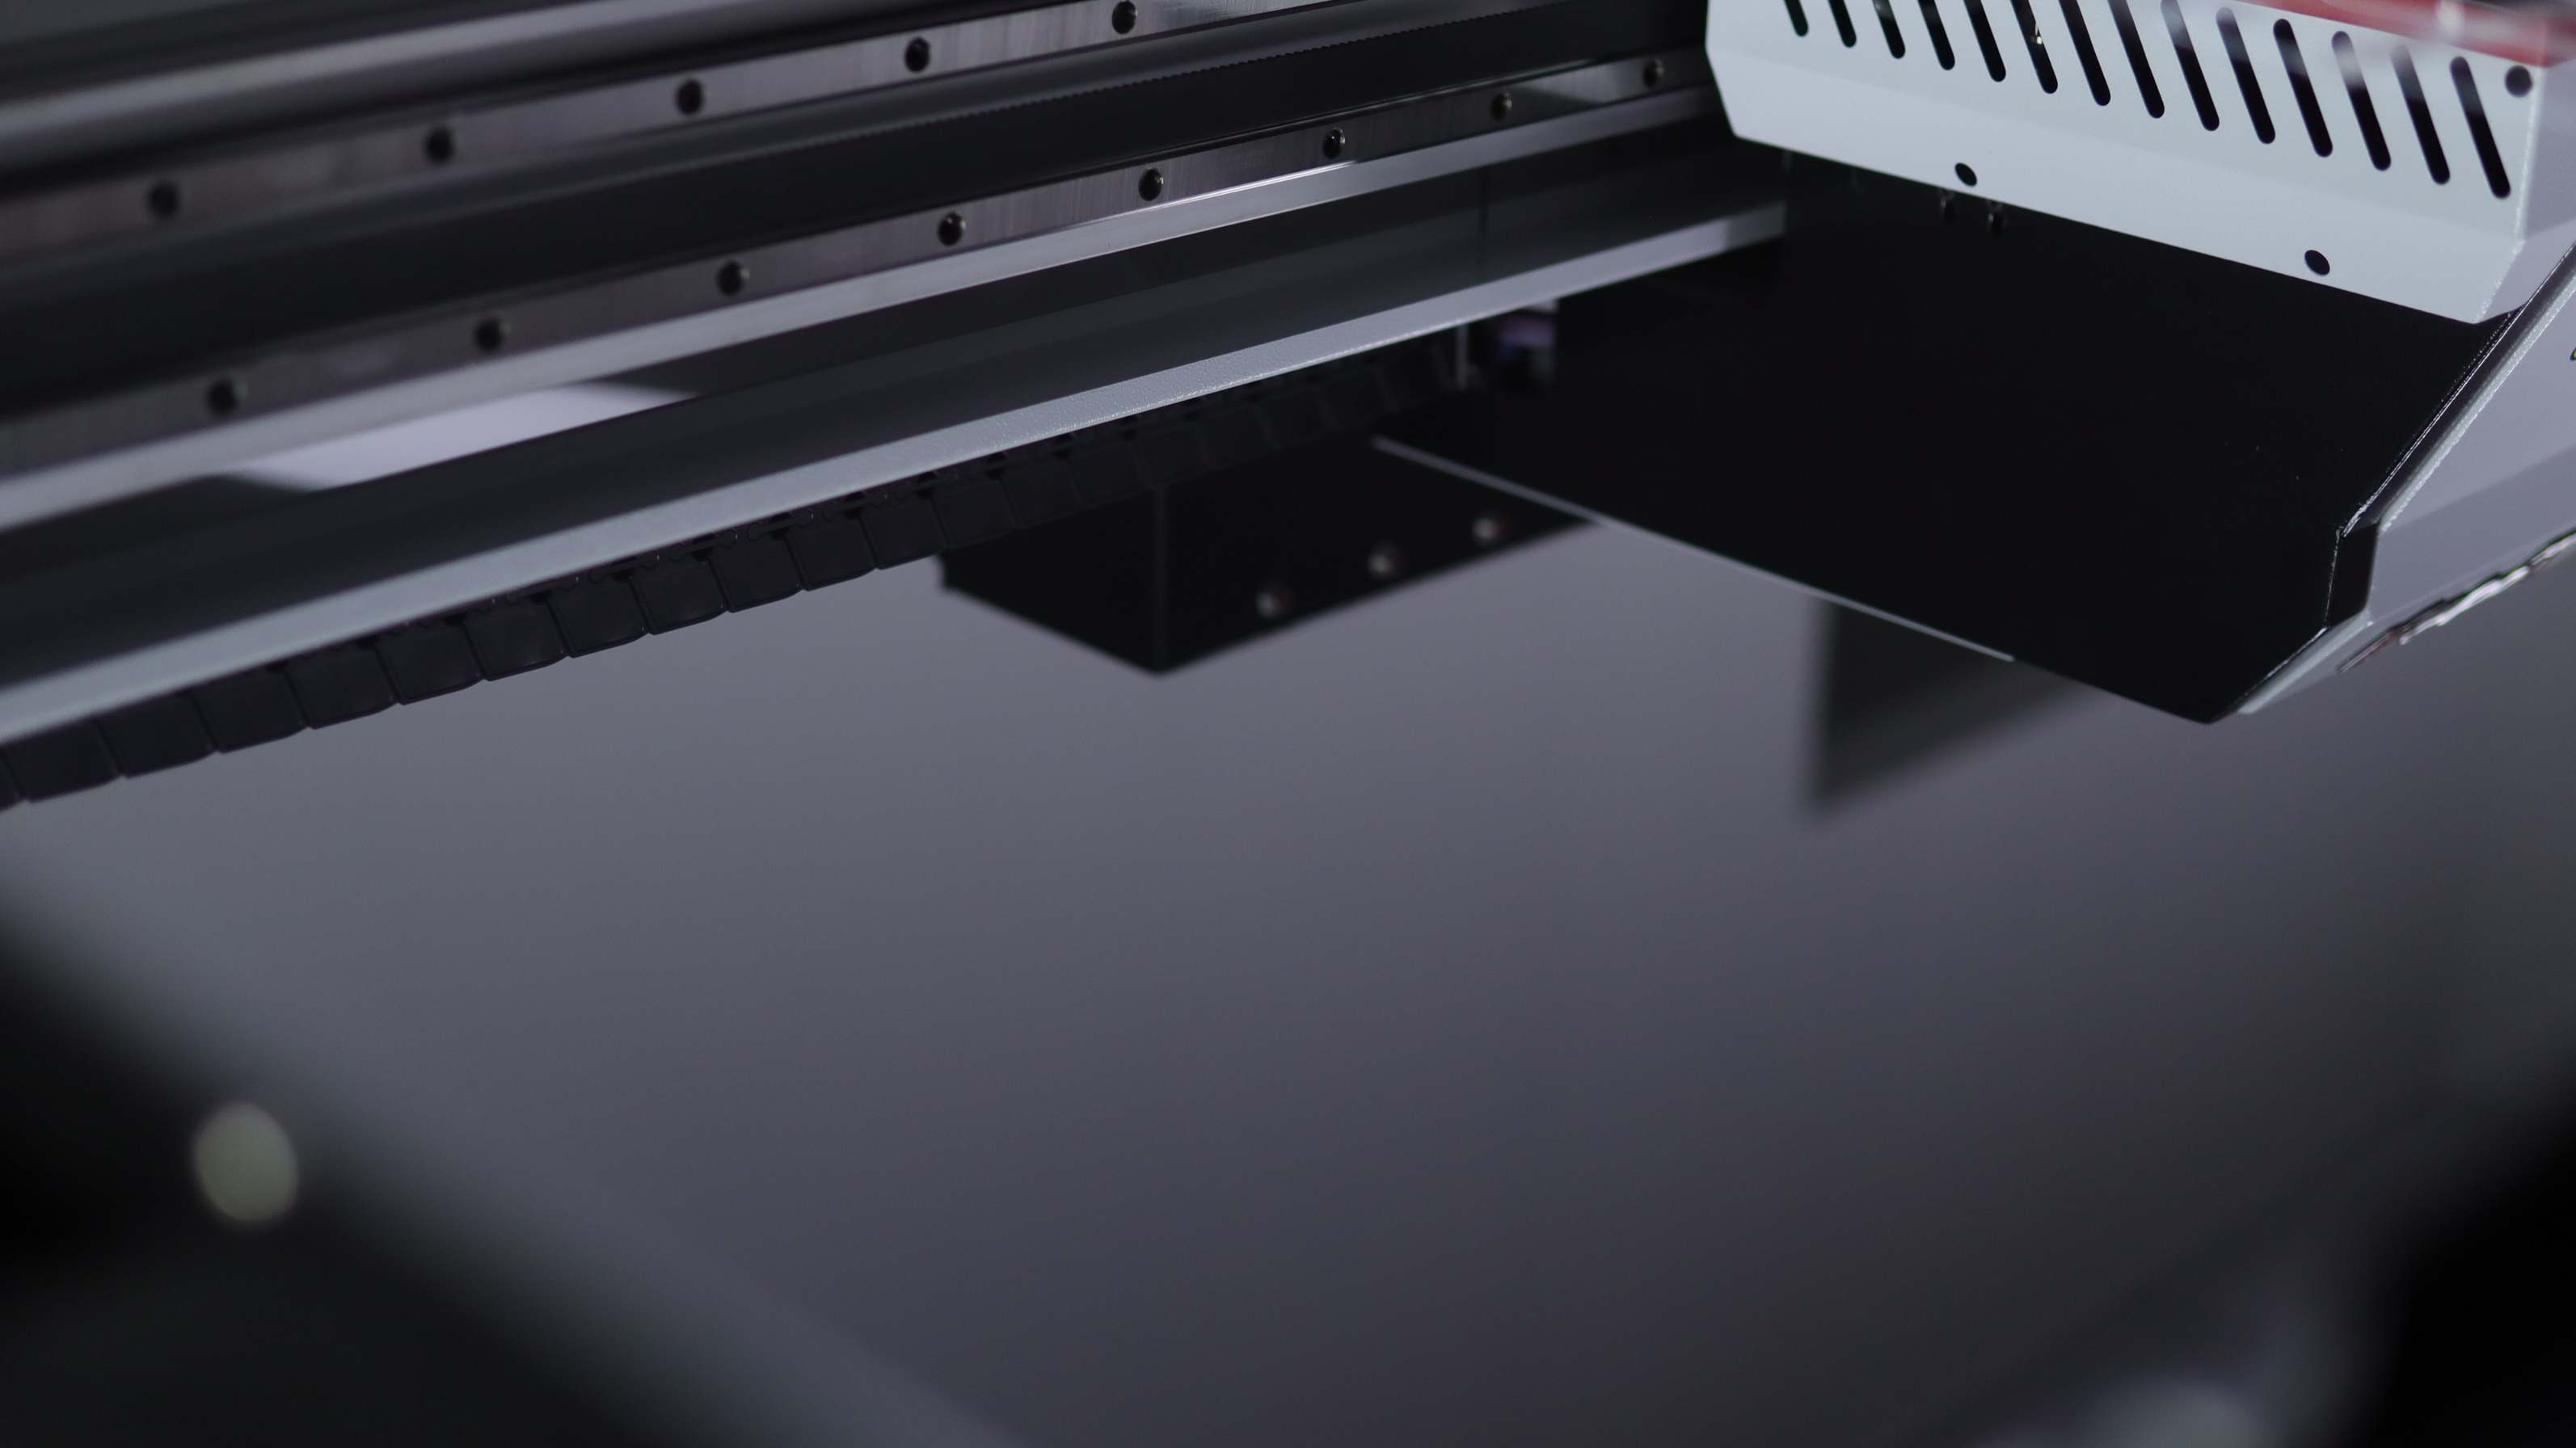 2-a1-6090-uv-flatbed-printer-platform